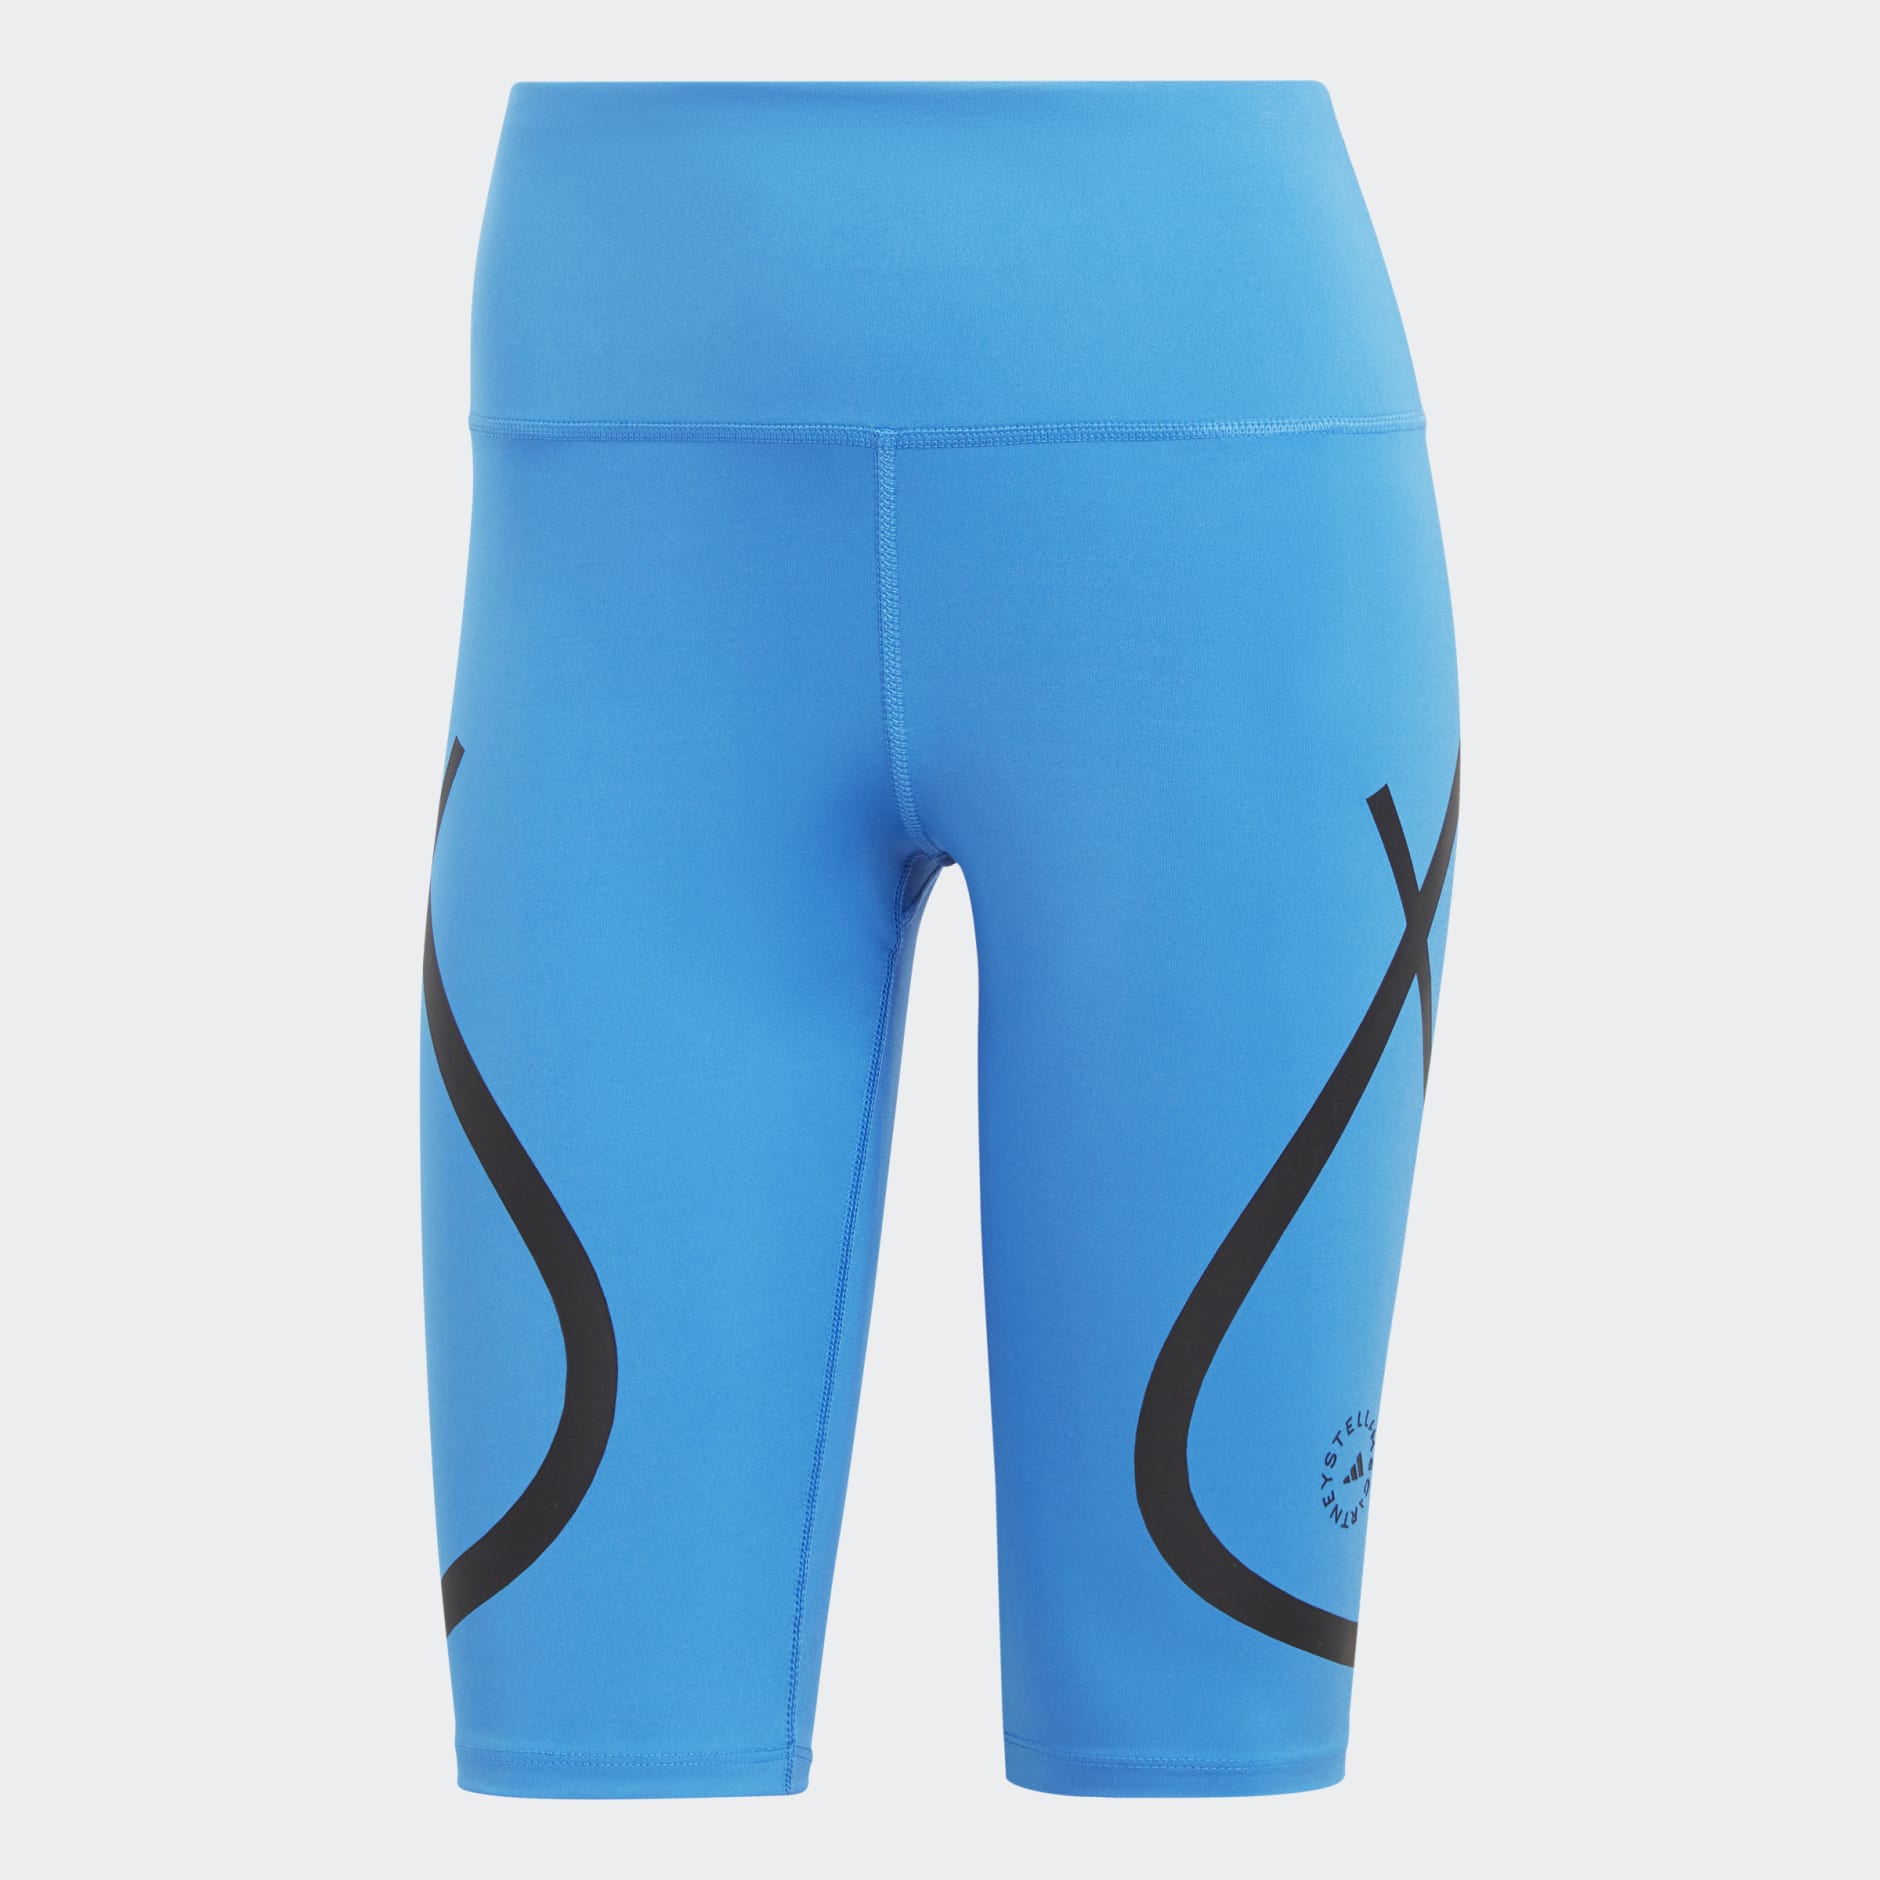 Blue cycling shorts